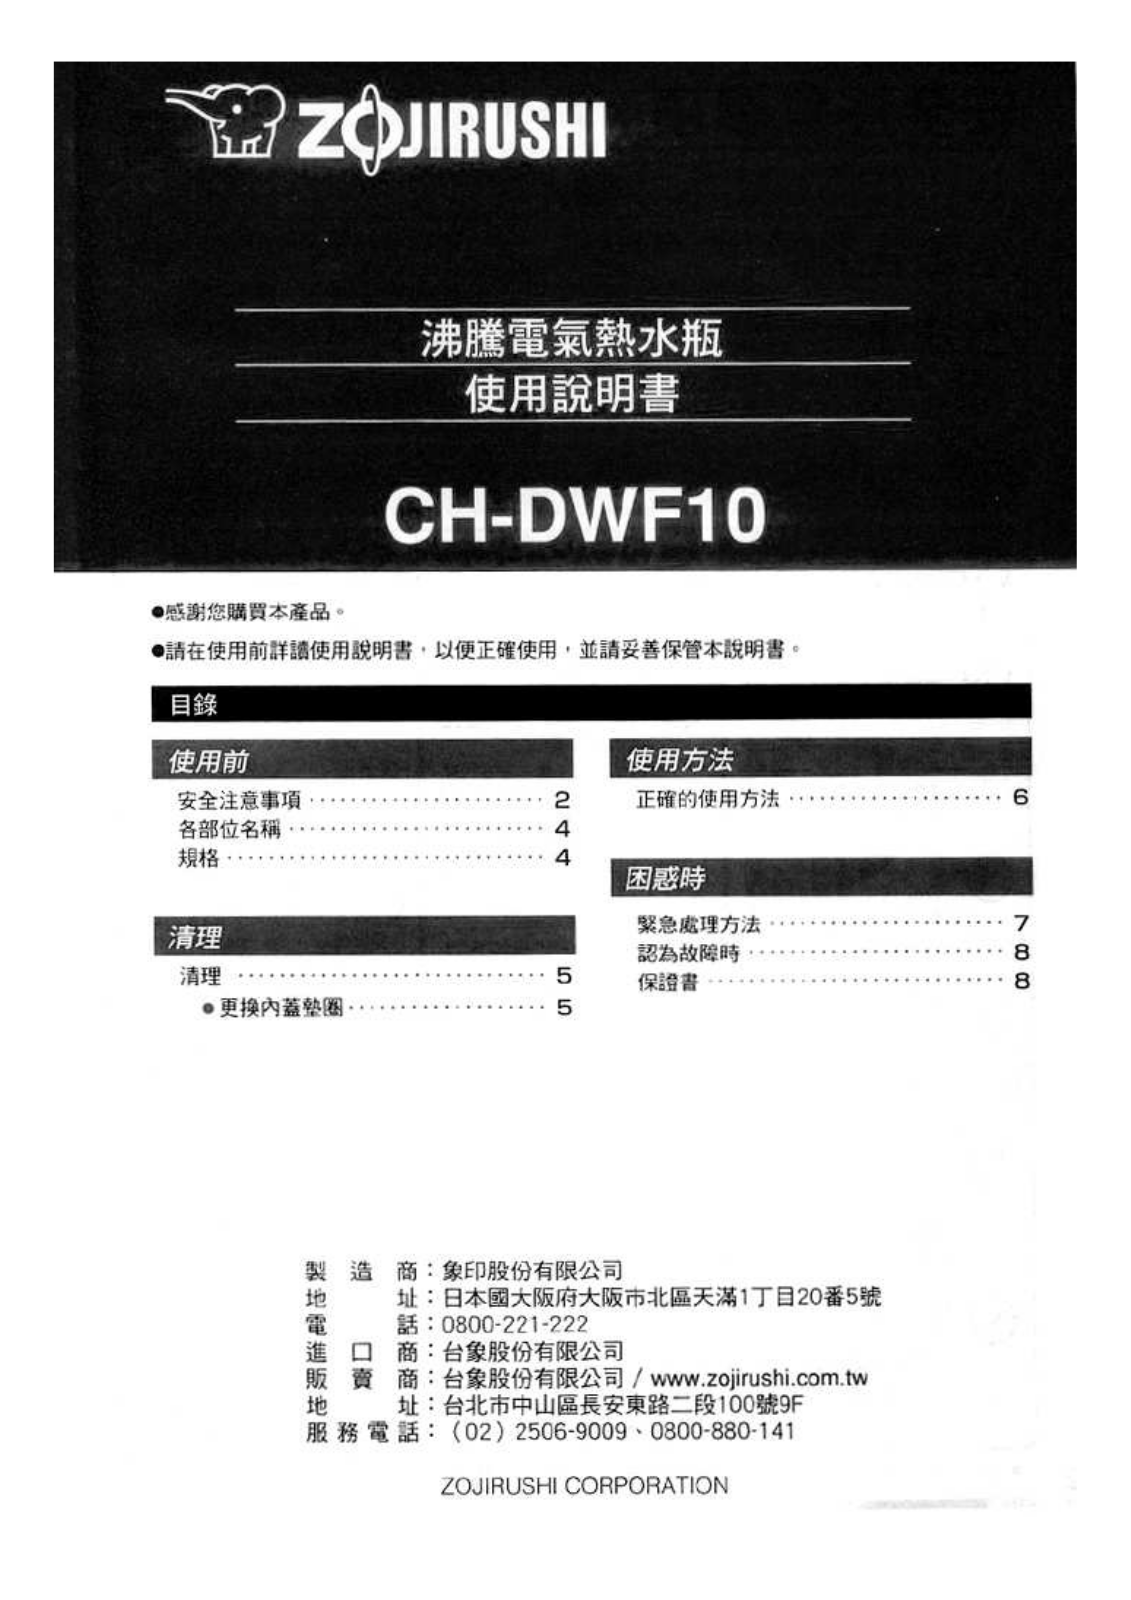 ZOJIRUSHI CH-DWF10 User Manual